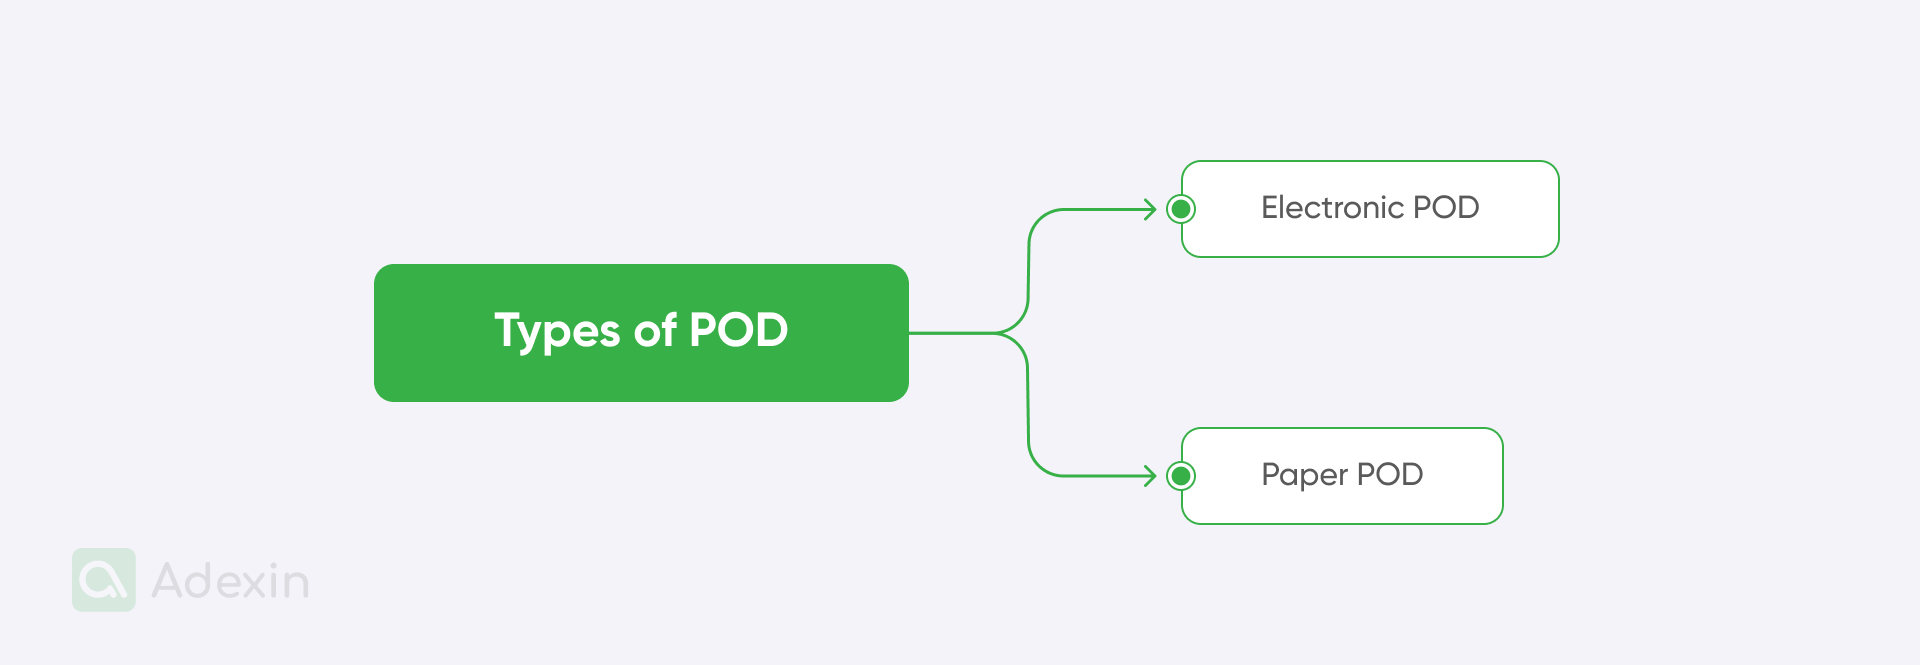 Types of POD